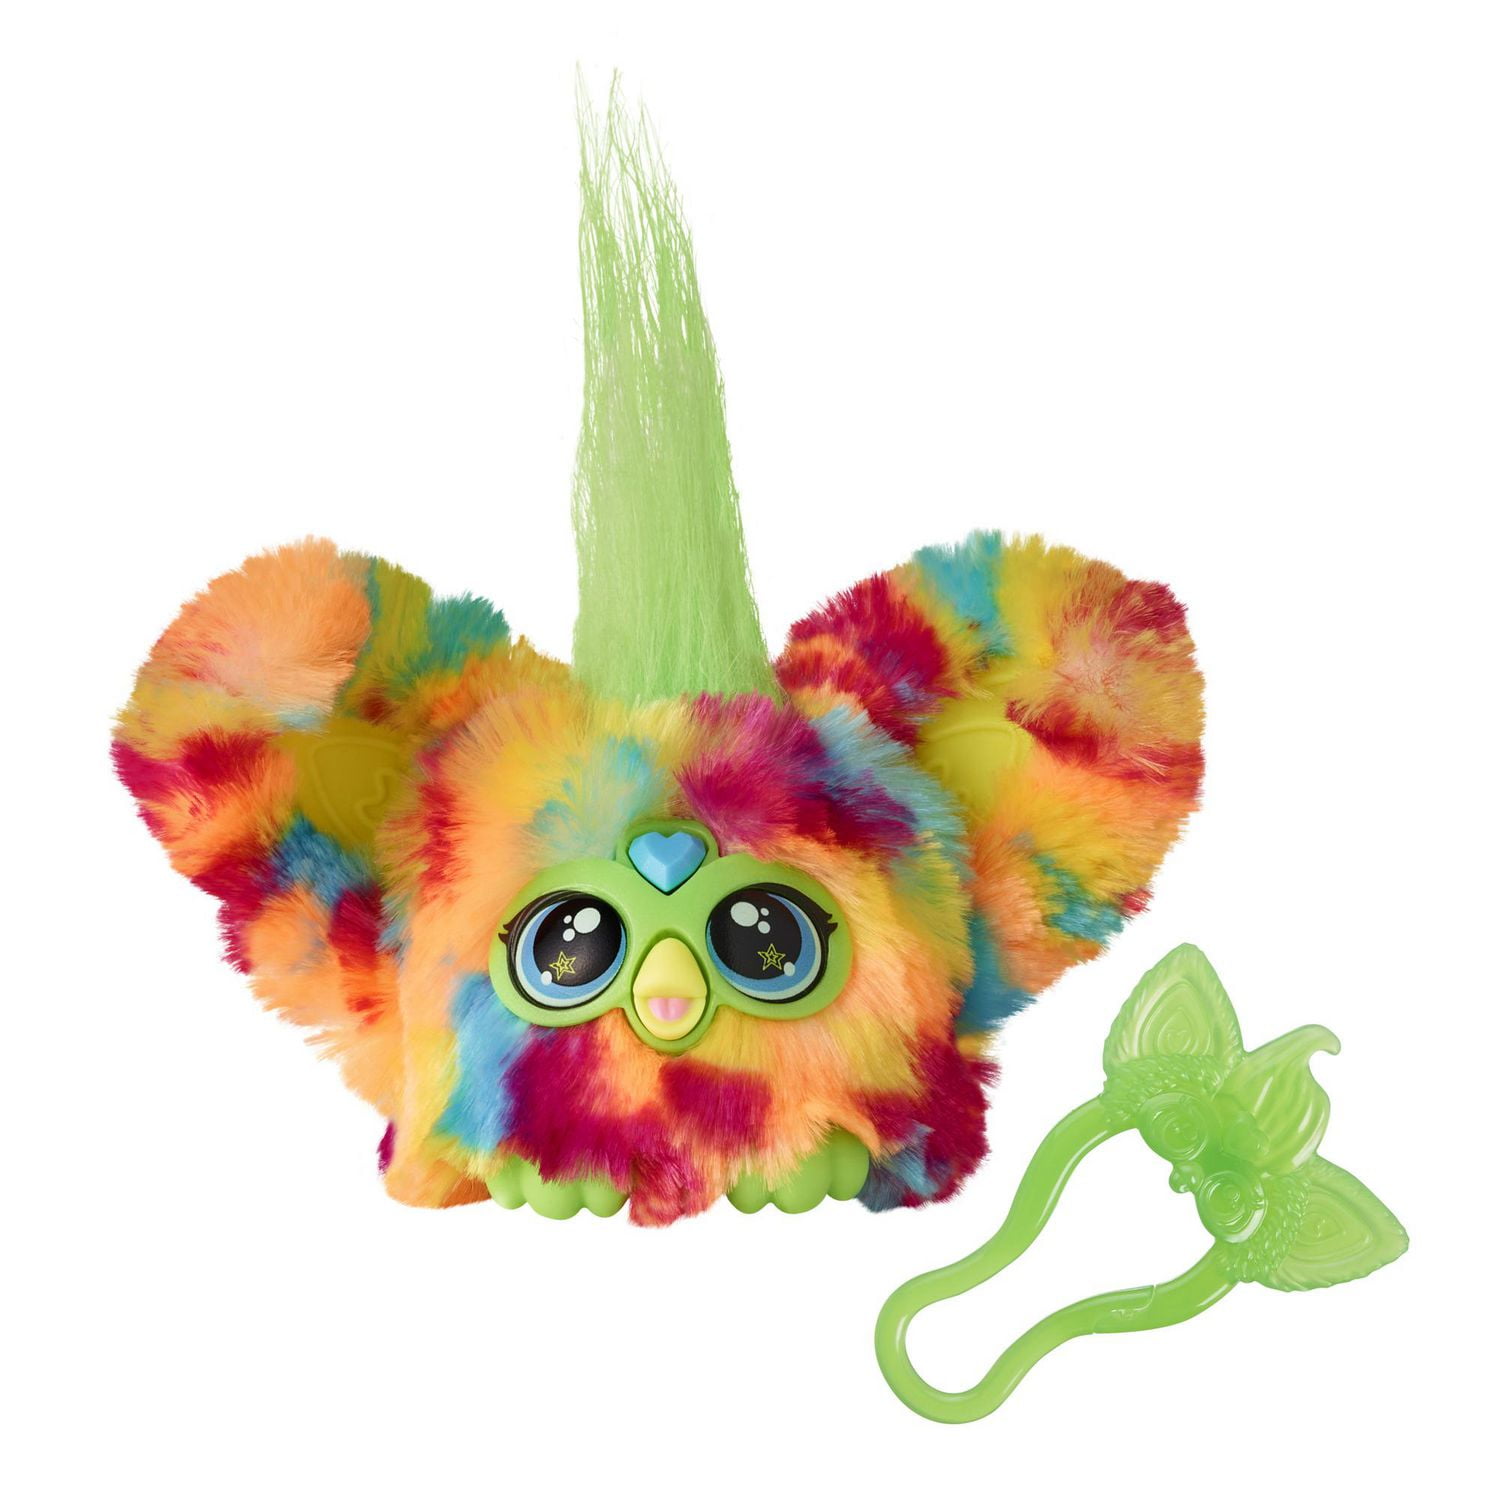 Furby Furblets Mello-Nee Mini Electronic Plush Toy